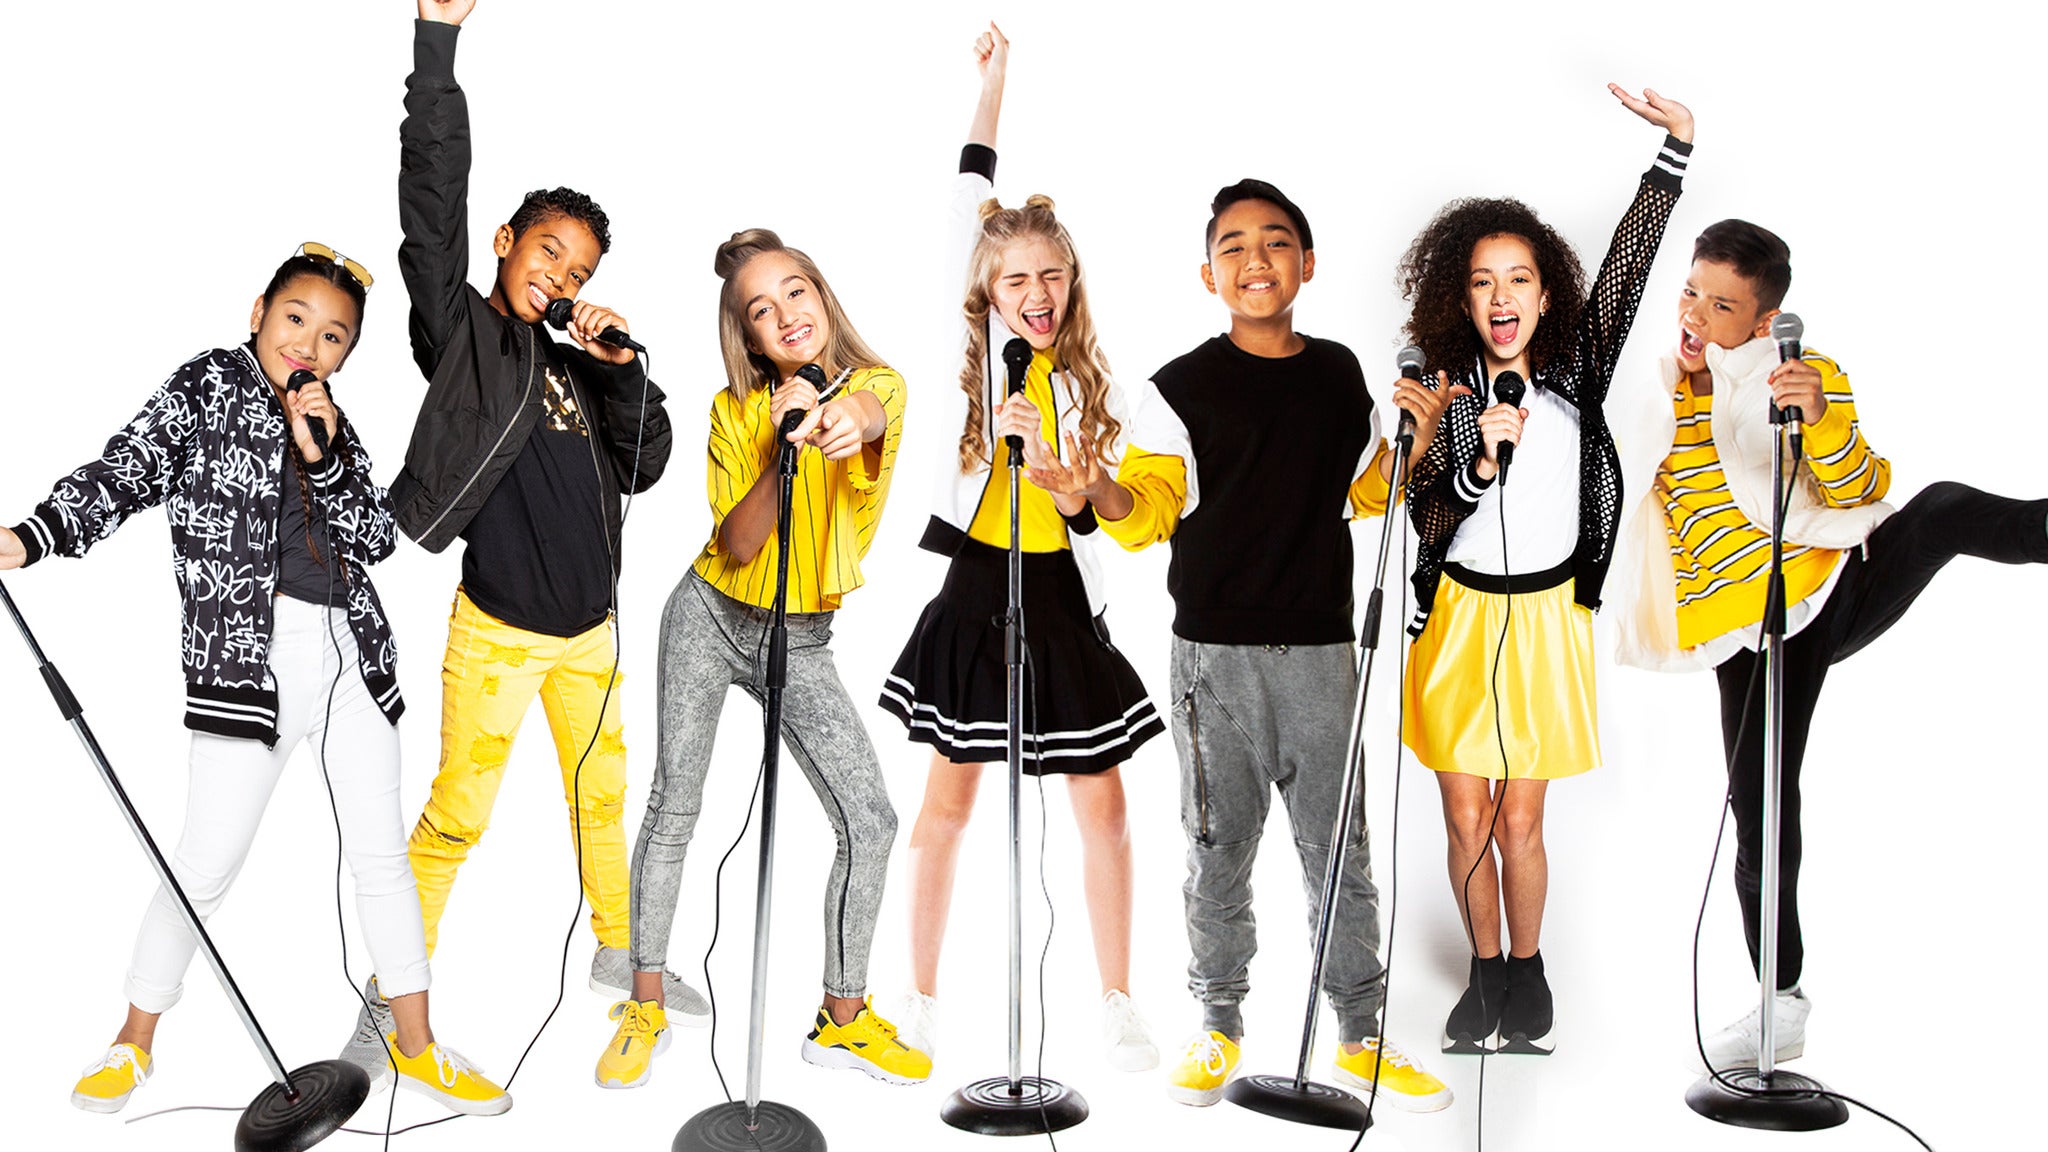 Mini Pop Kids Live: Take Flight Concert Tour in Winnipeg promo photo for Me + 3 Promotional  presale offer code